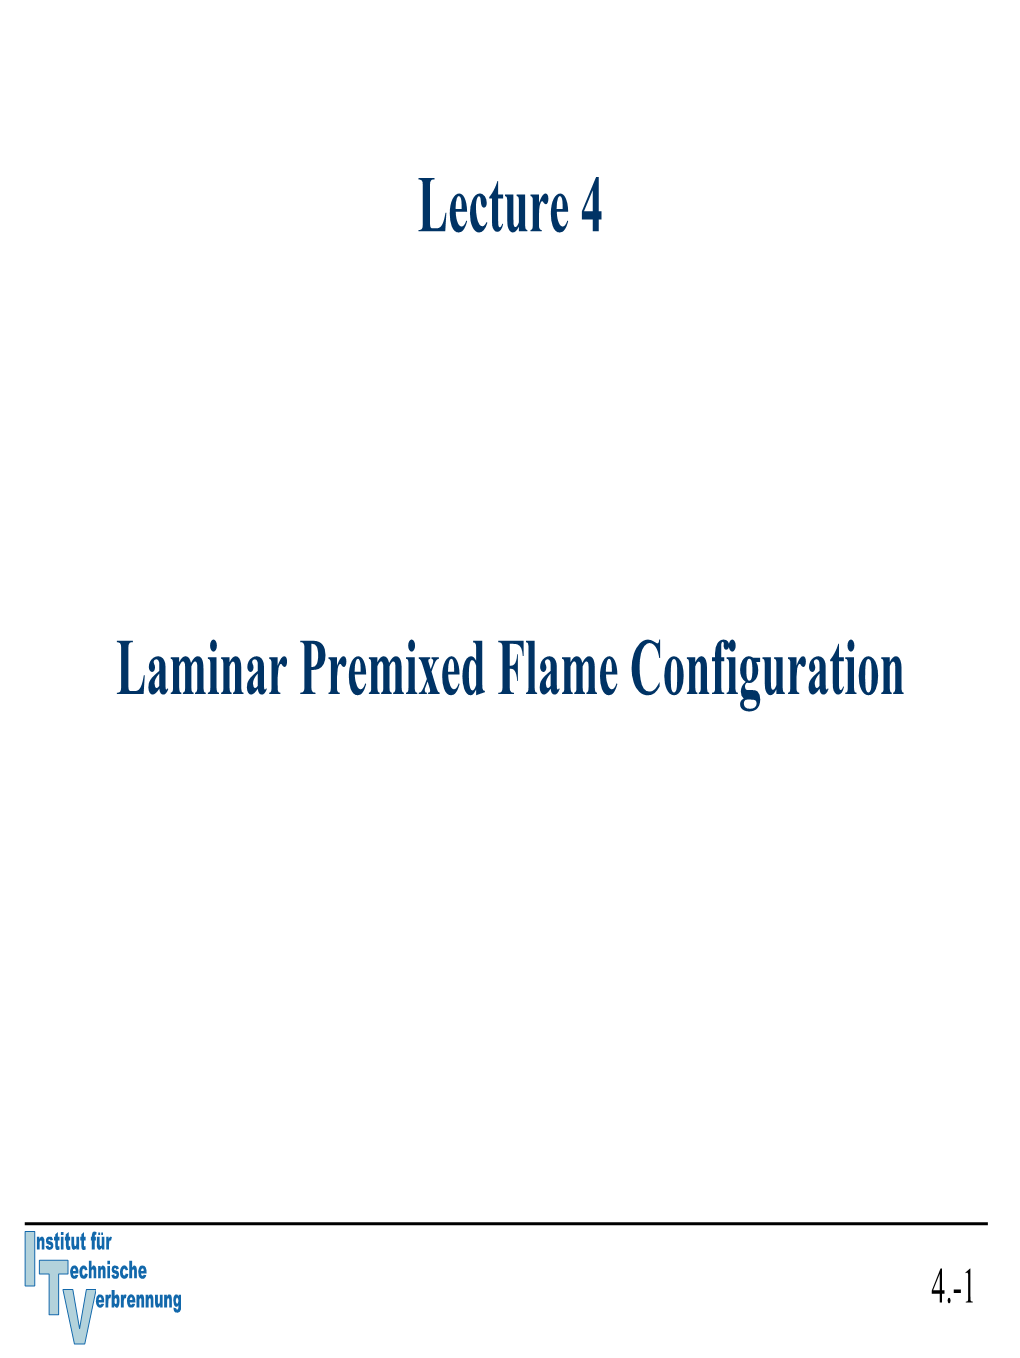 Lecture 4 Laminar Premixed Flame Configuration